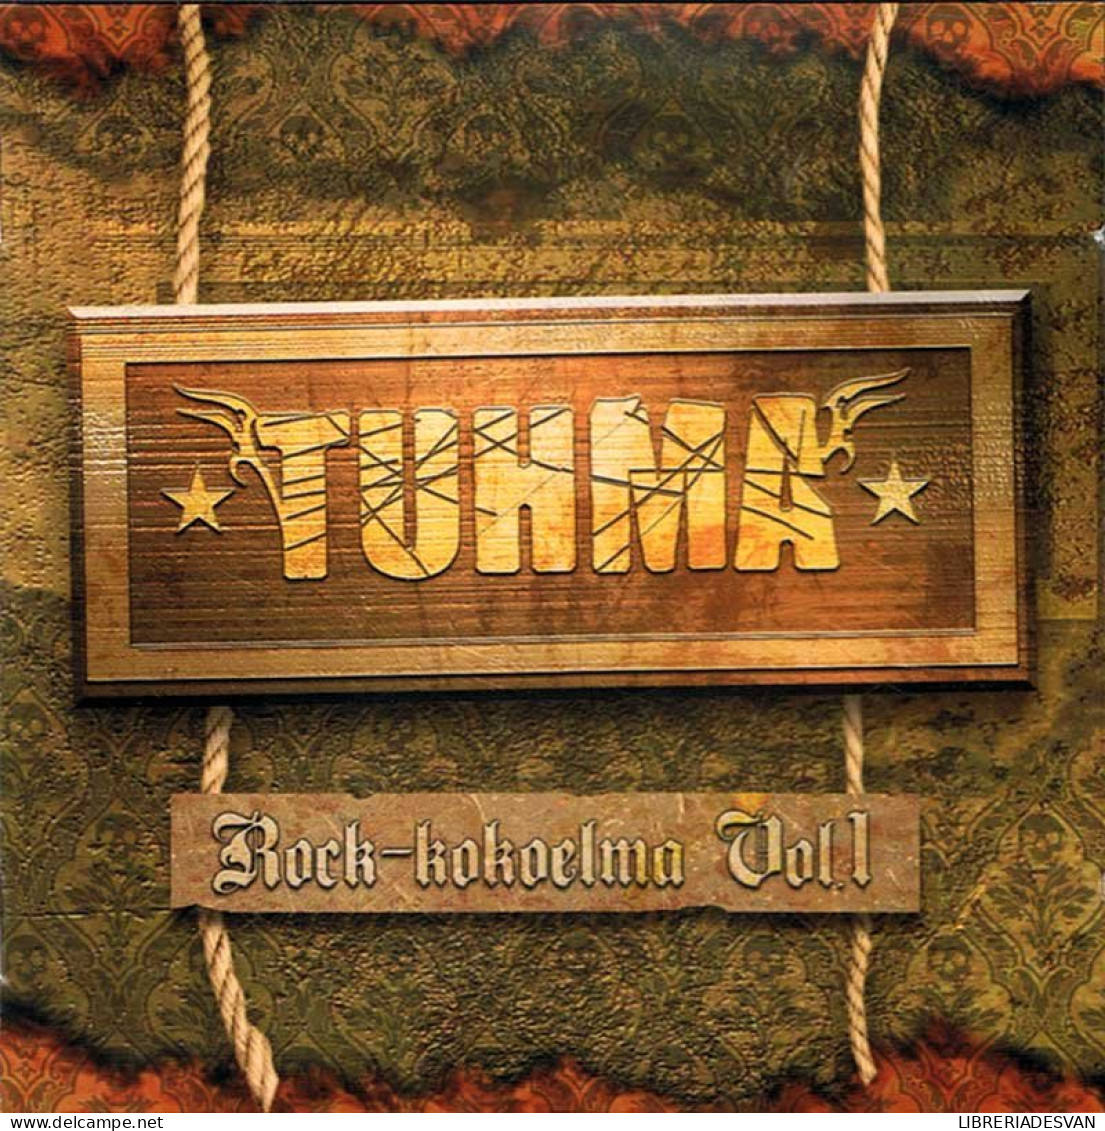 Tuhma Rock - Kokoelma Vol. 1. CD - Rock